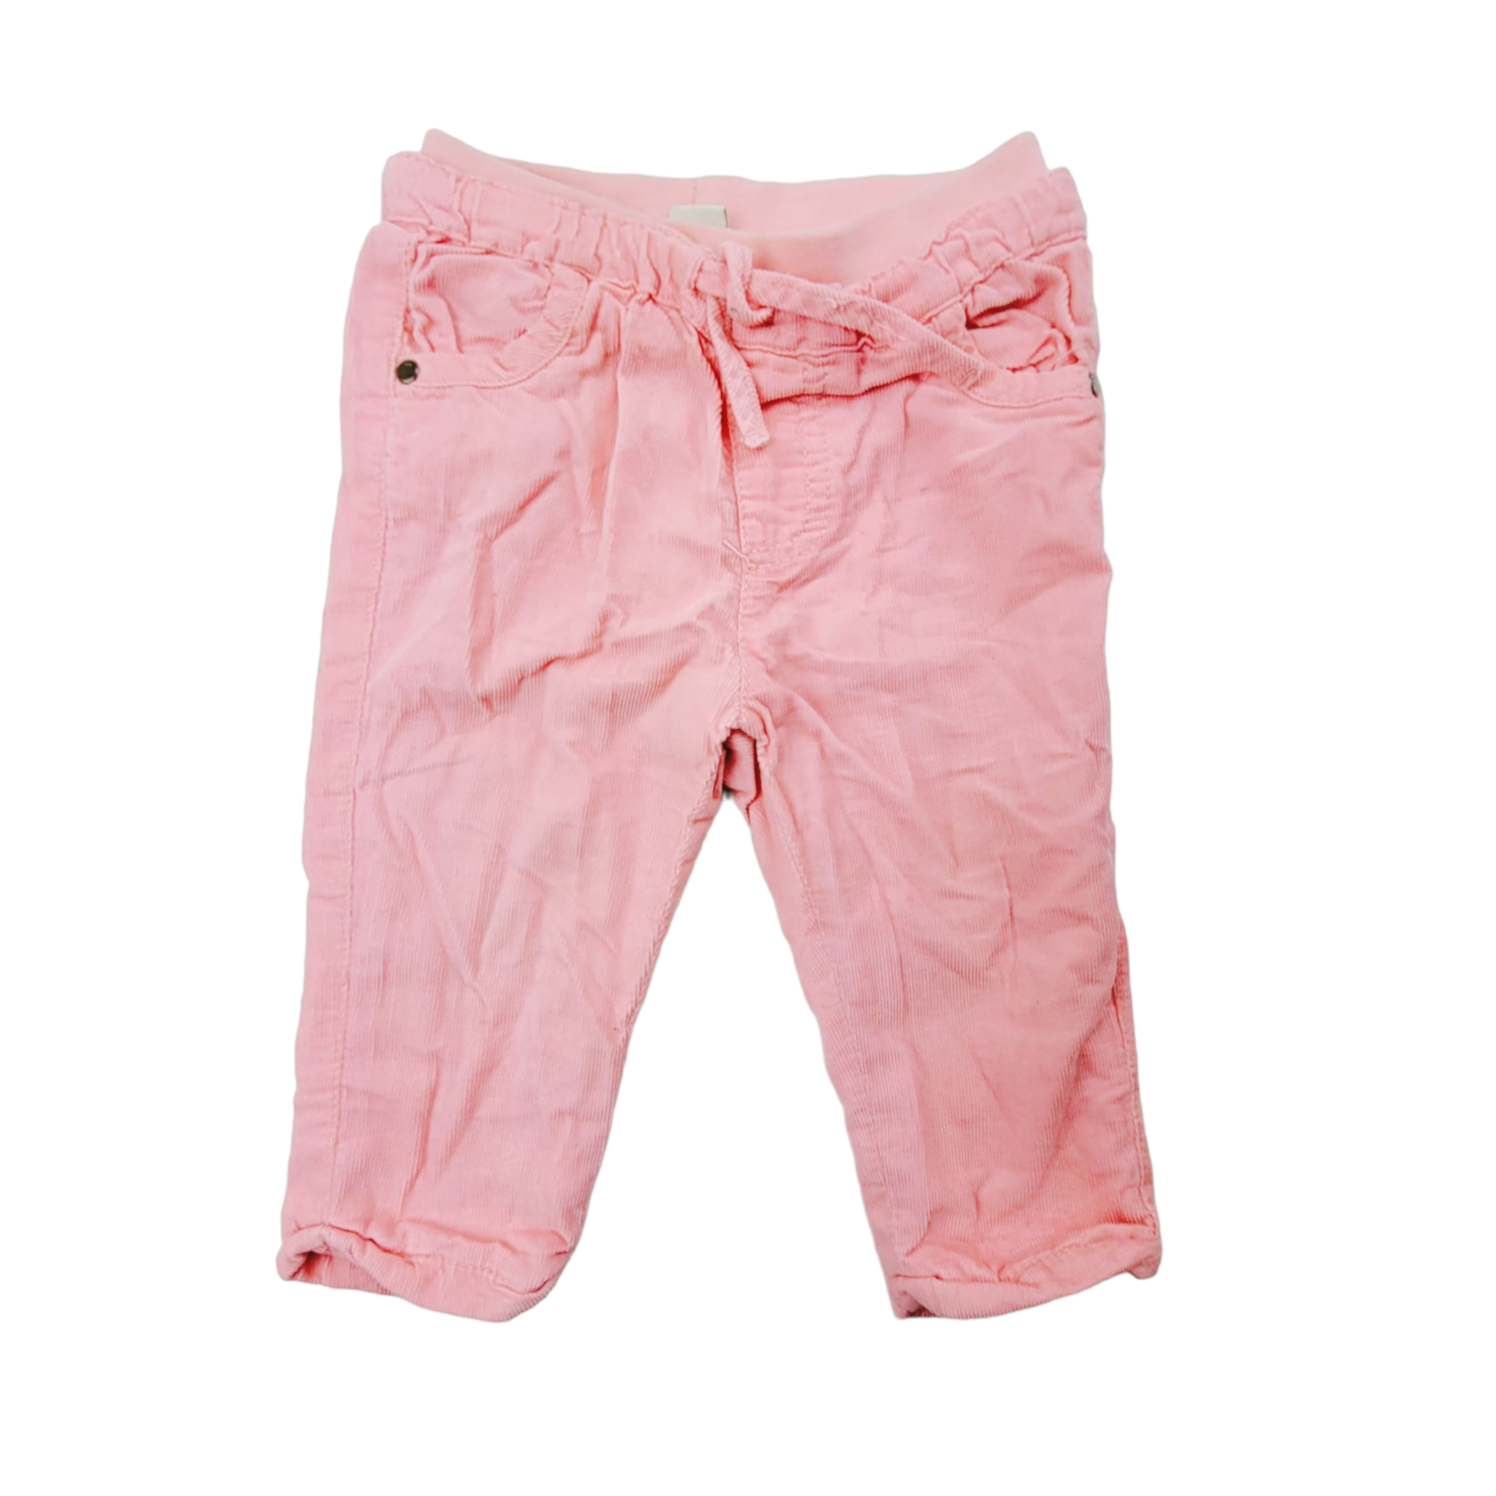 Pantalon de cotele rosado forrado con interior de algodon